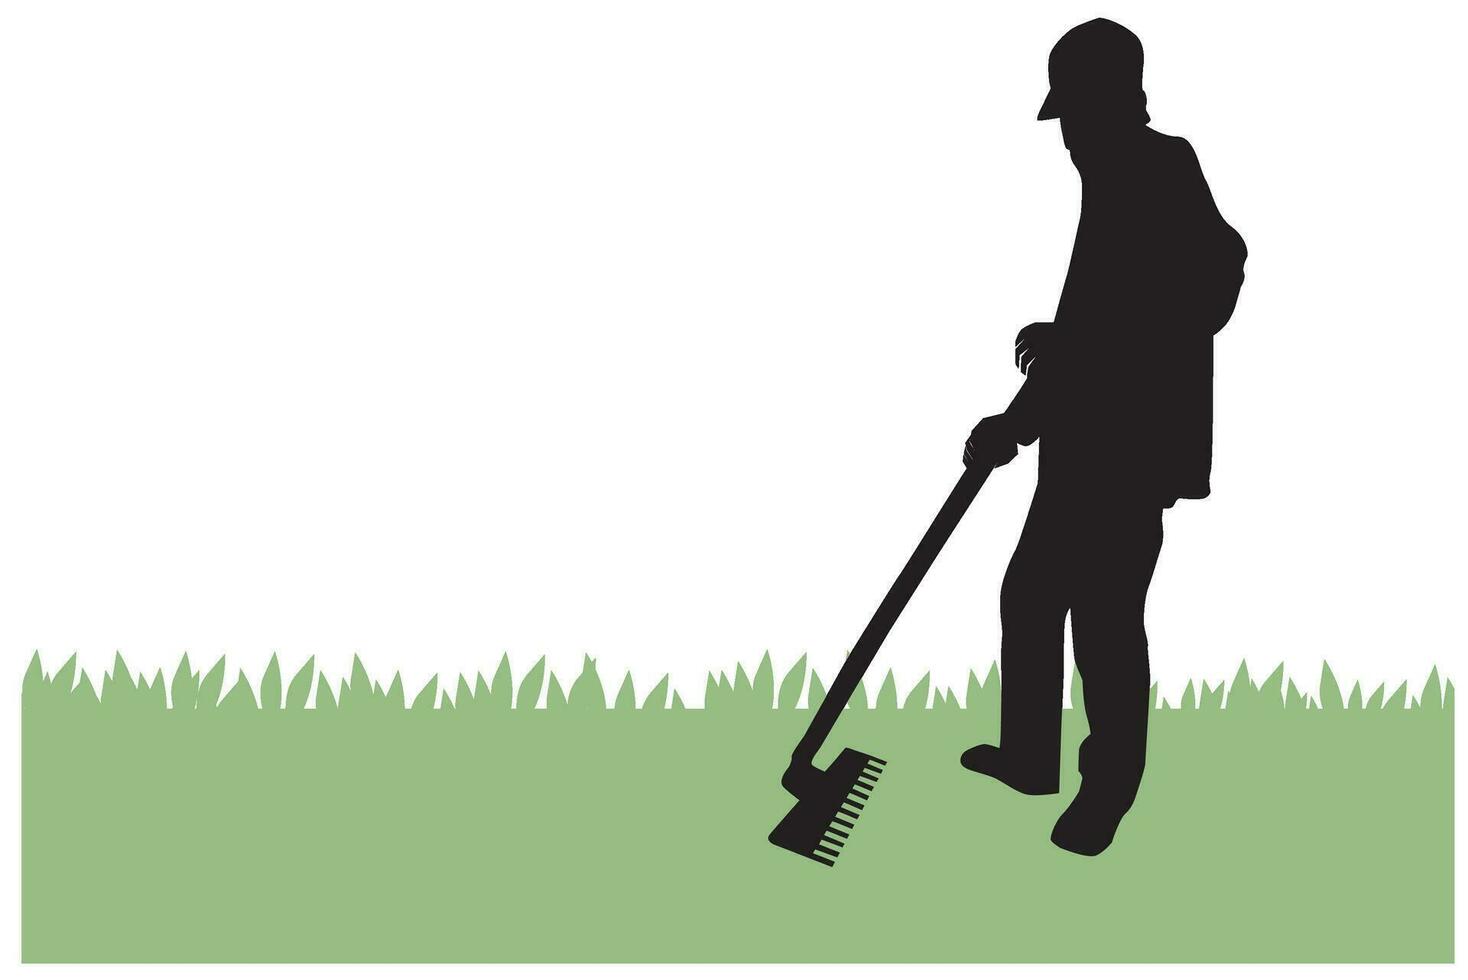 Gardener raking grass, illustration vector